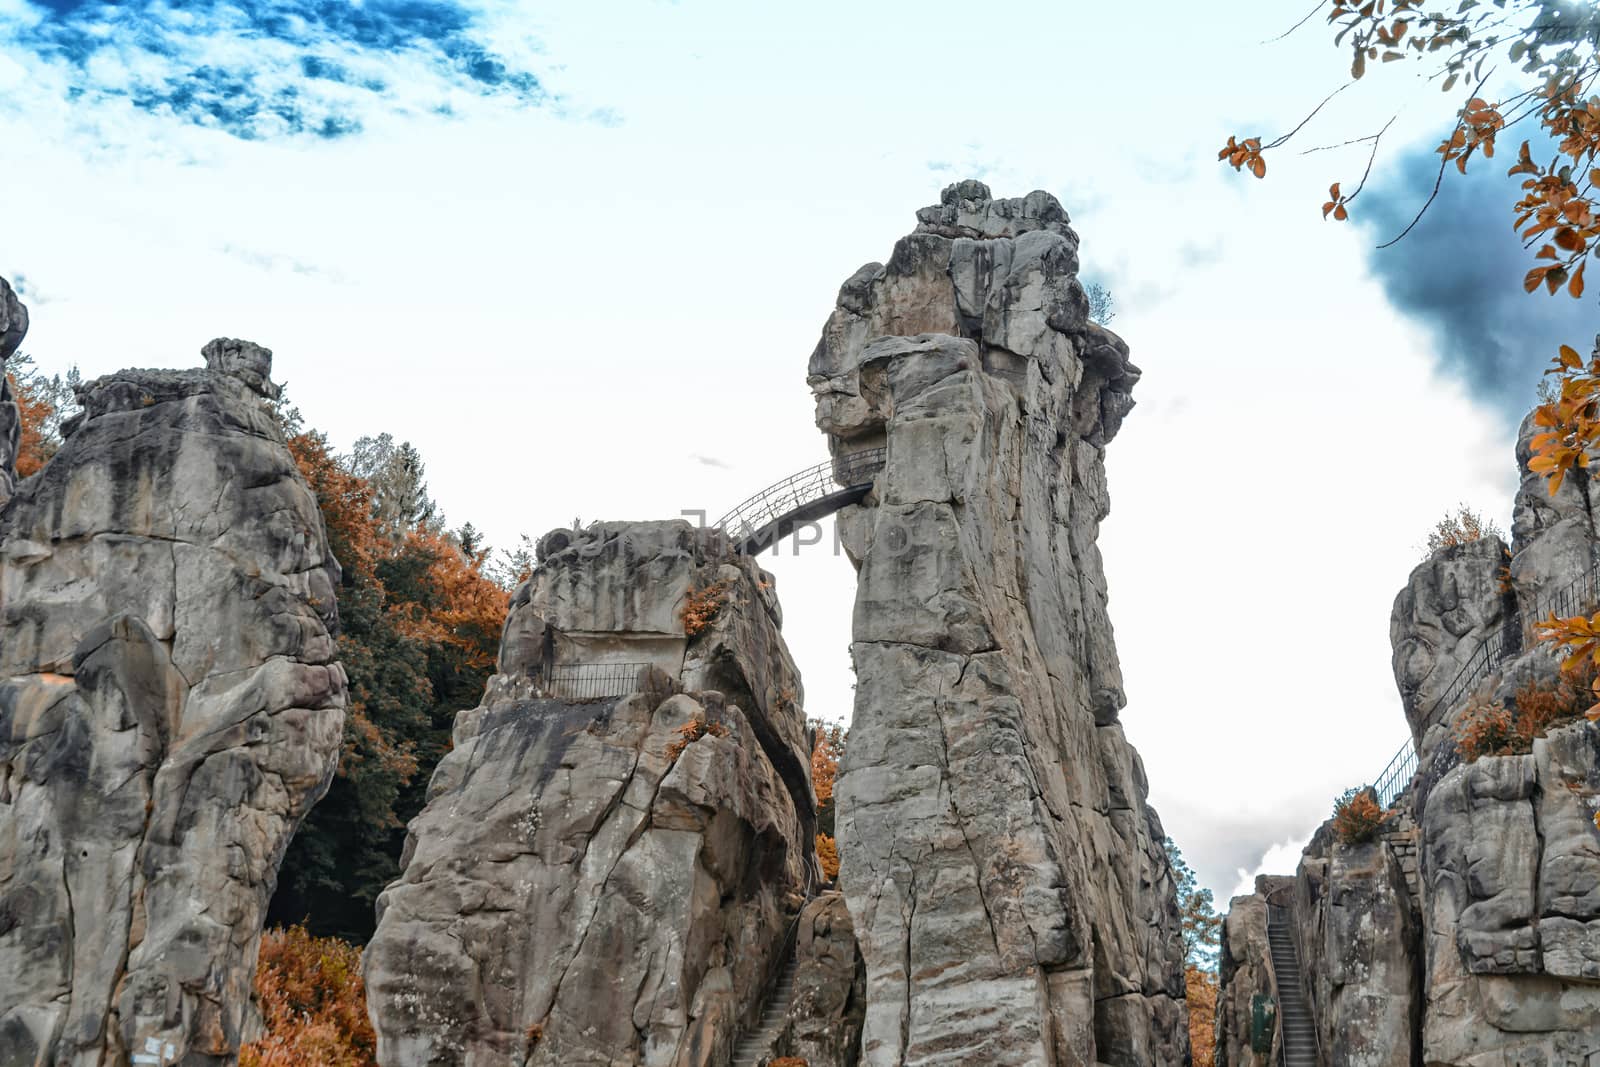 The Externsteine in Indian Summer Look, striking sandstone rock formation in the Teutoburg Forest, Germany, North Rhine Westphalia